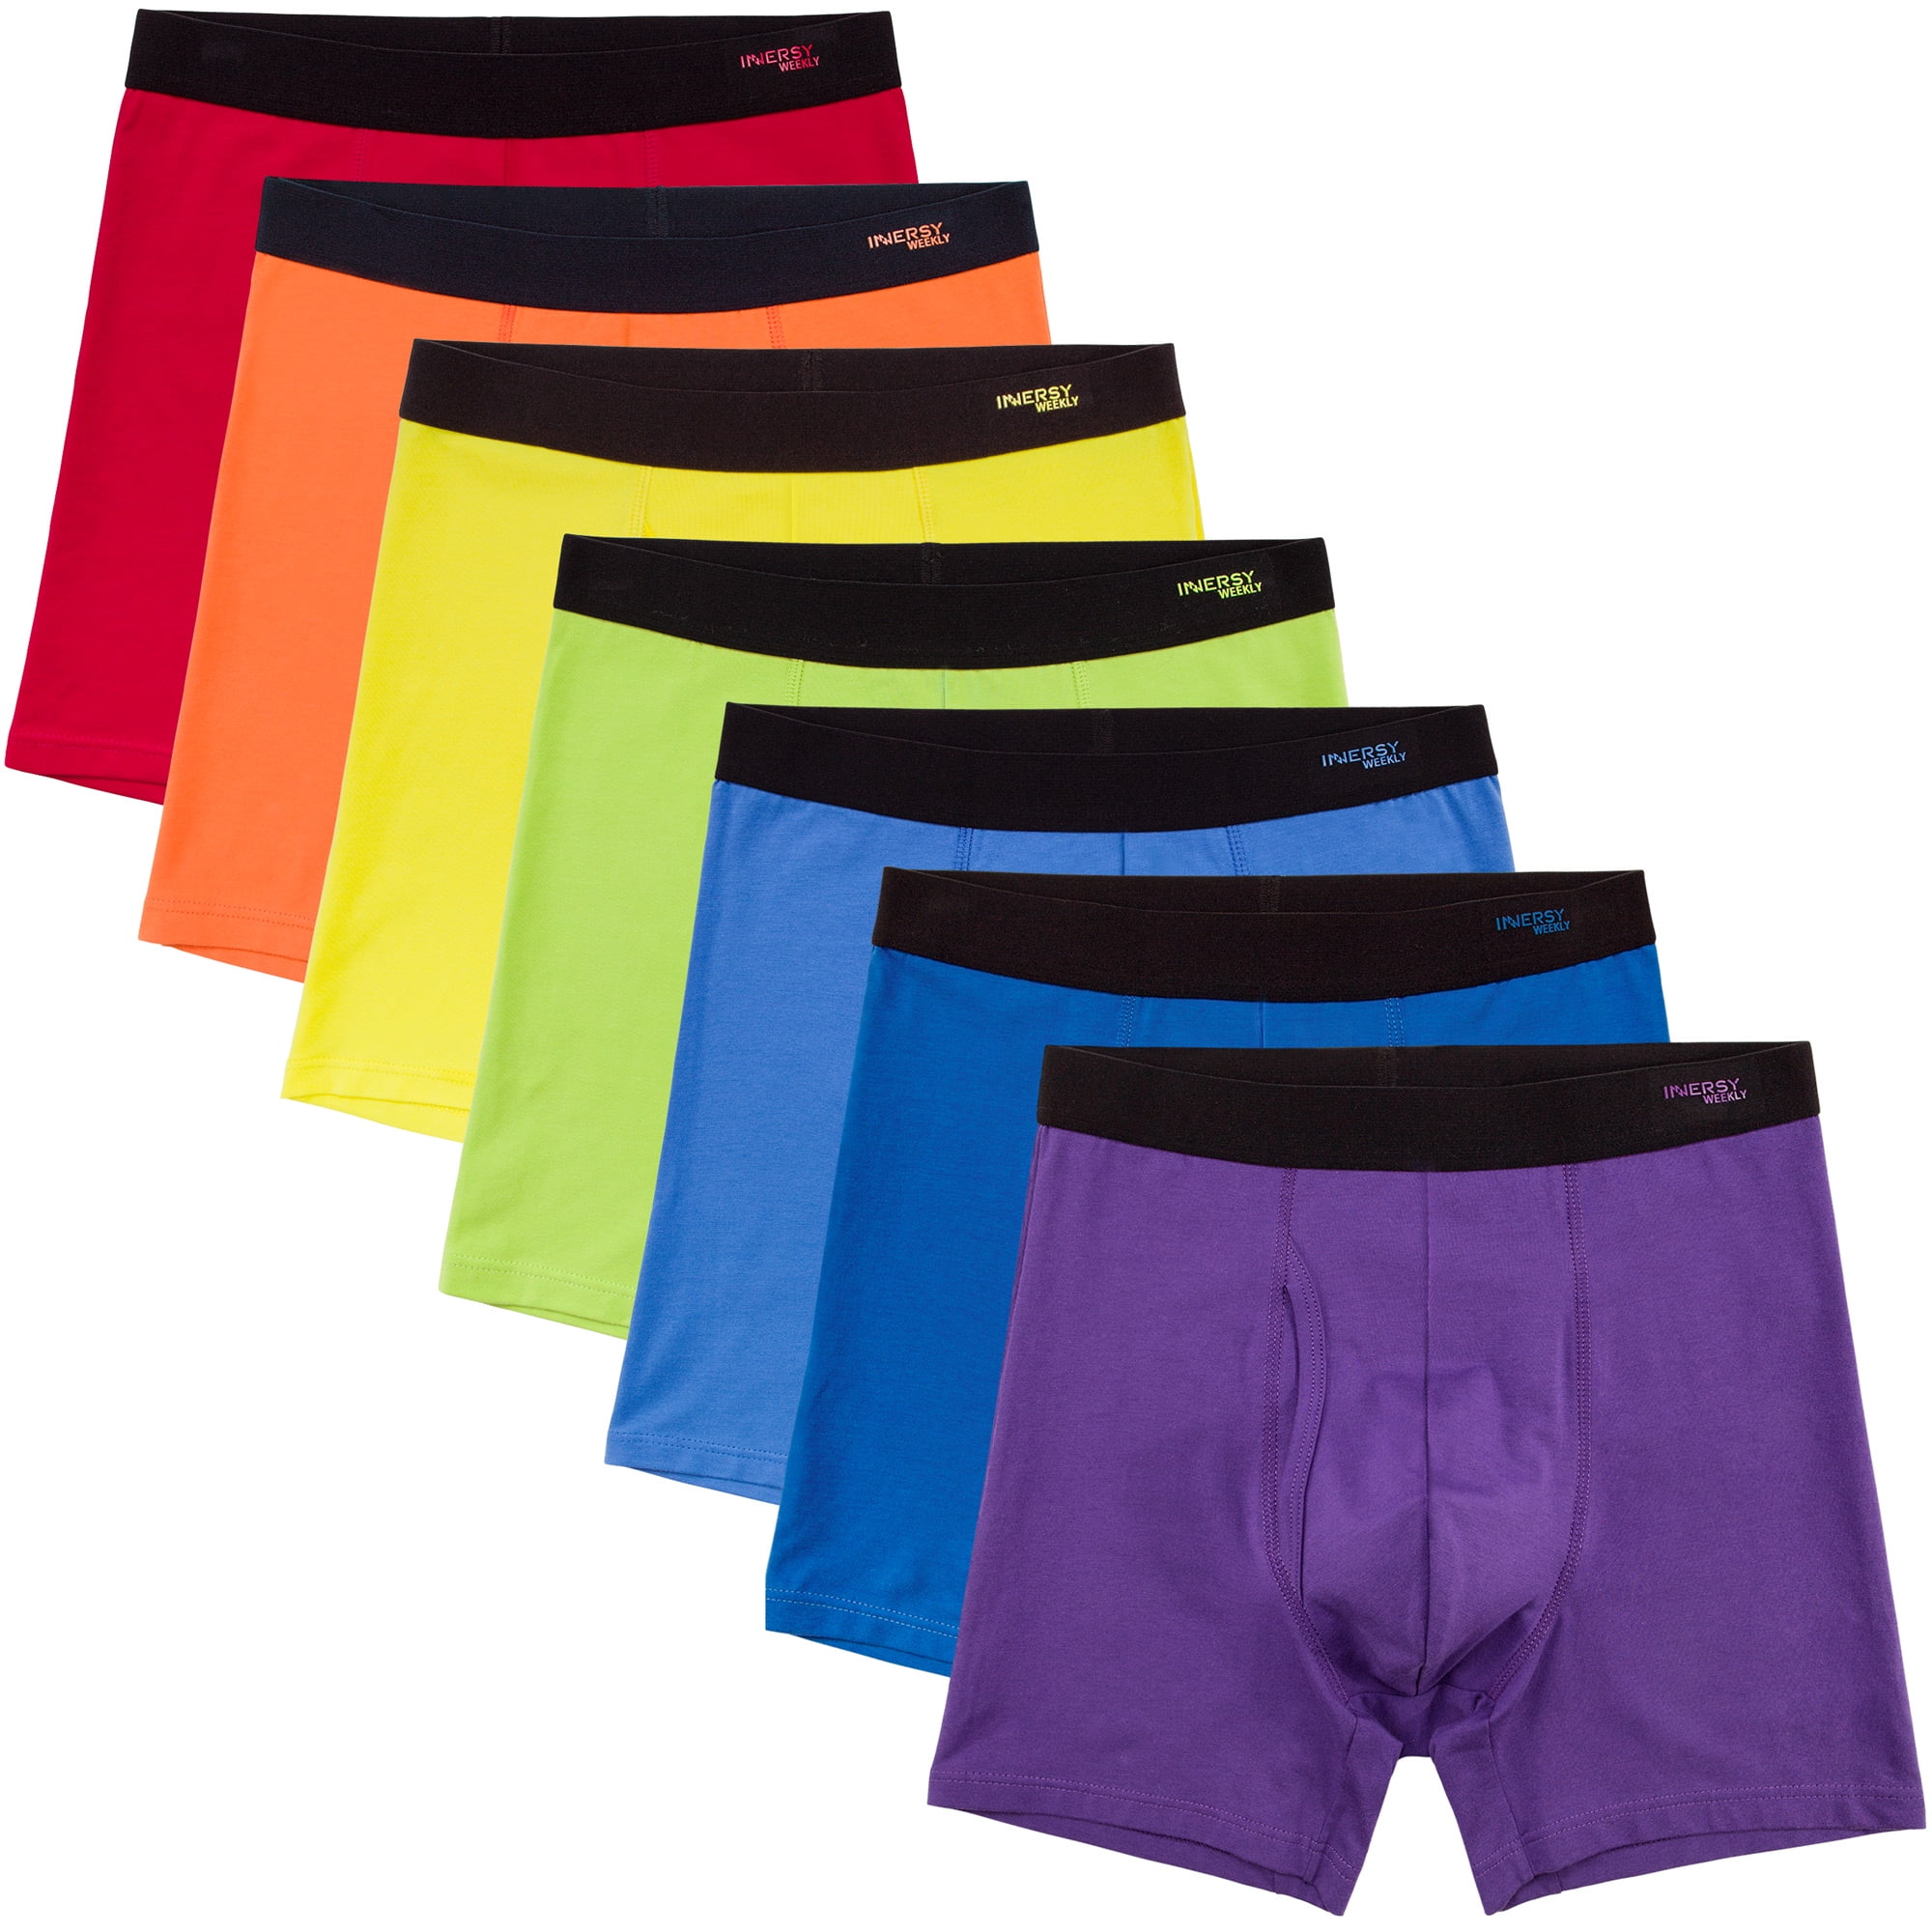 herwinnen puree Bloody INNERSY Men's Boxer Briefs Cotton Stretchy Underwear 7 Pack for a  Week(Rainbow Colors, Medium) - Walmart.com